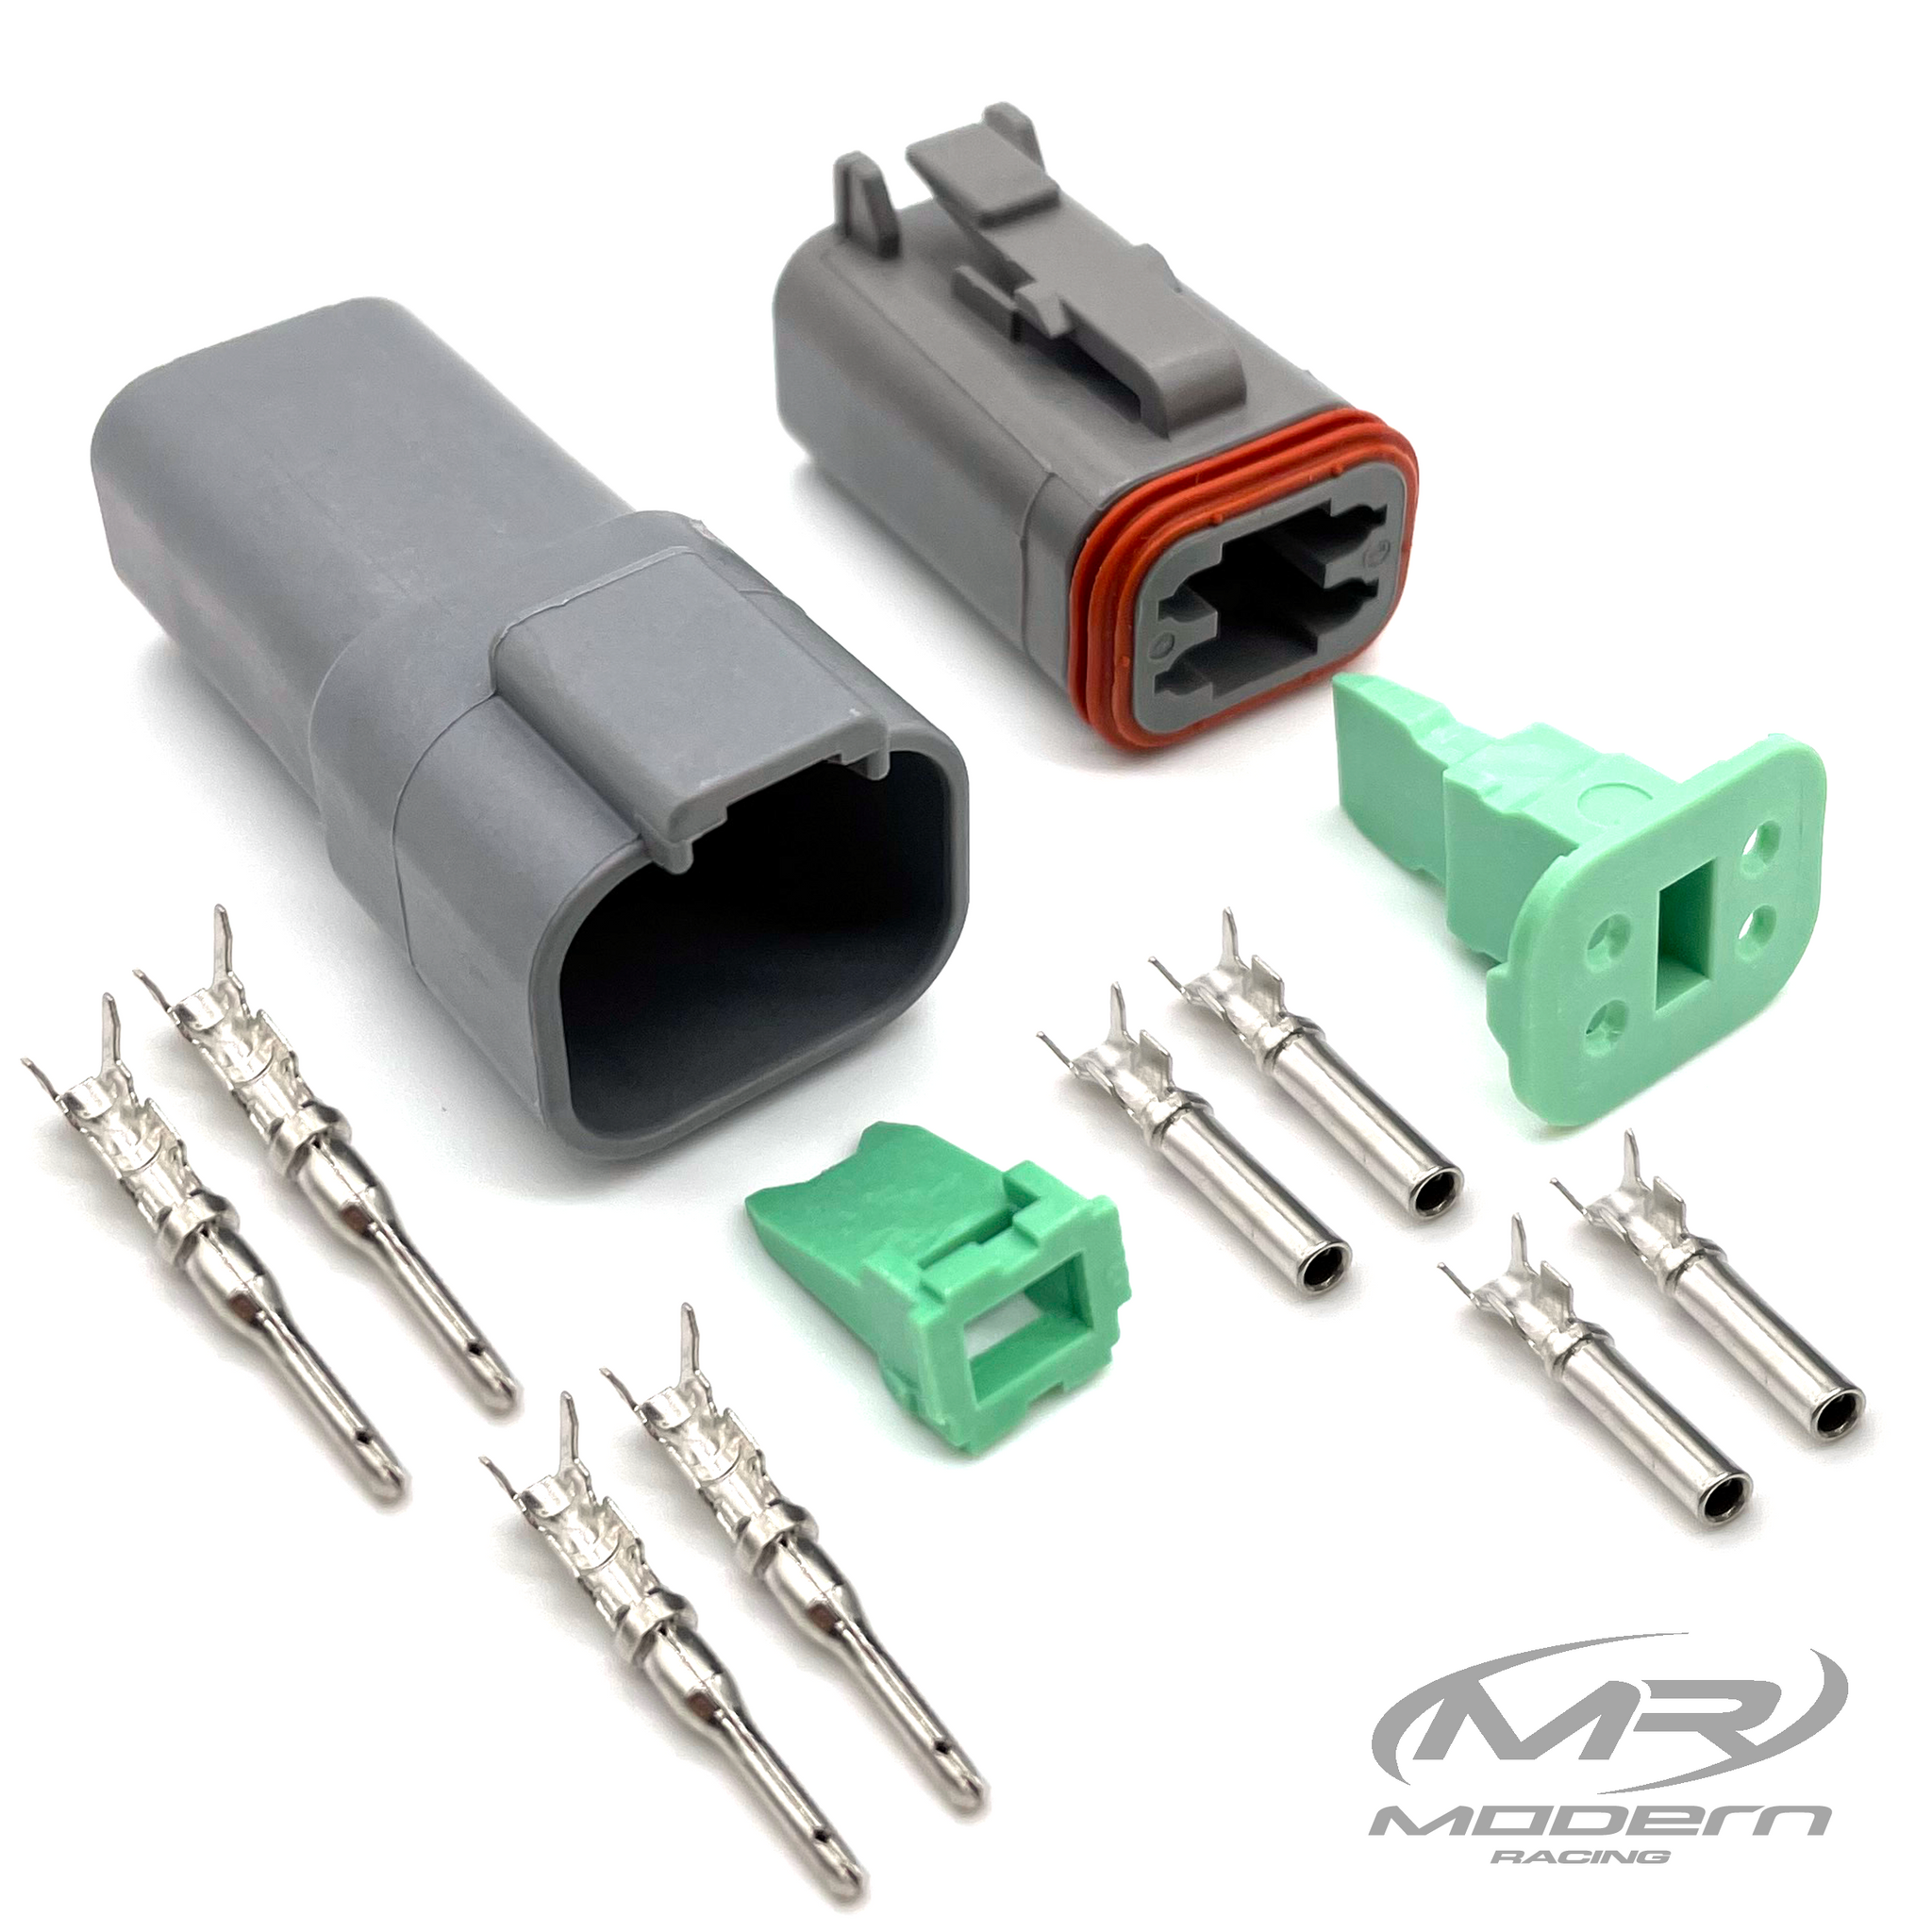 Deutsch DT 4 Socket/Pin Mating Pair Connector Kit (Gray)